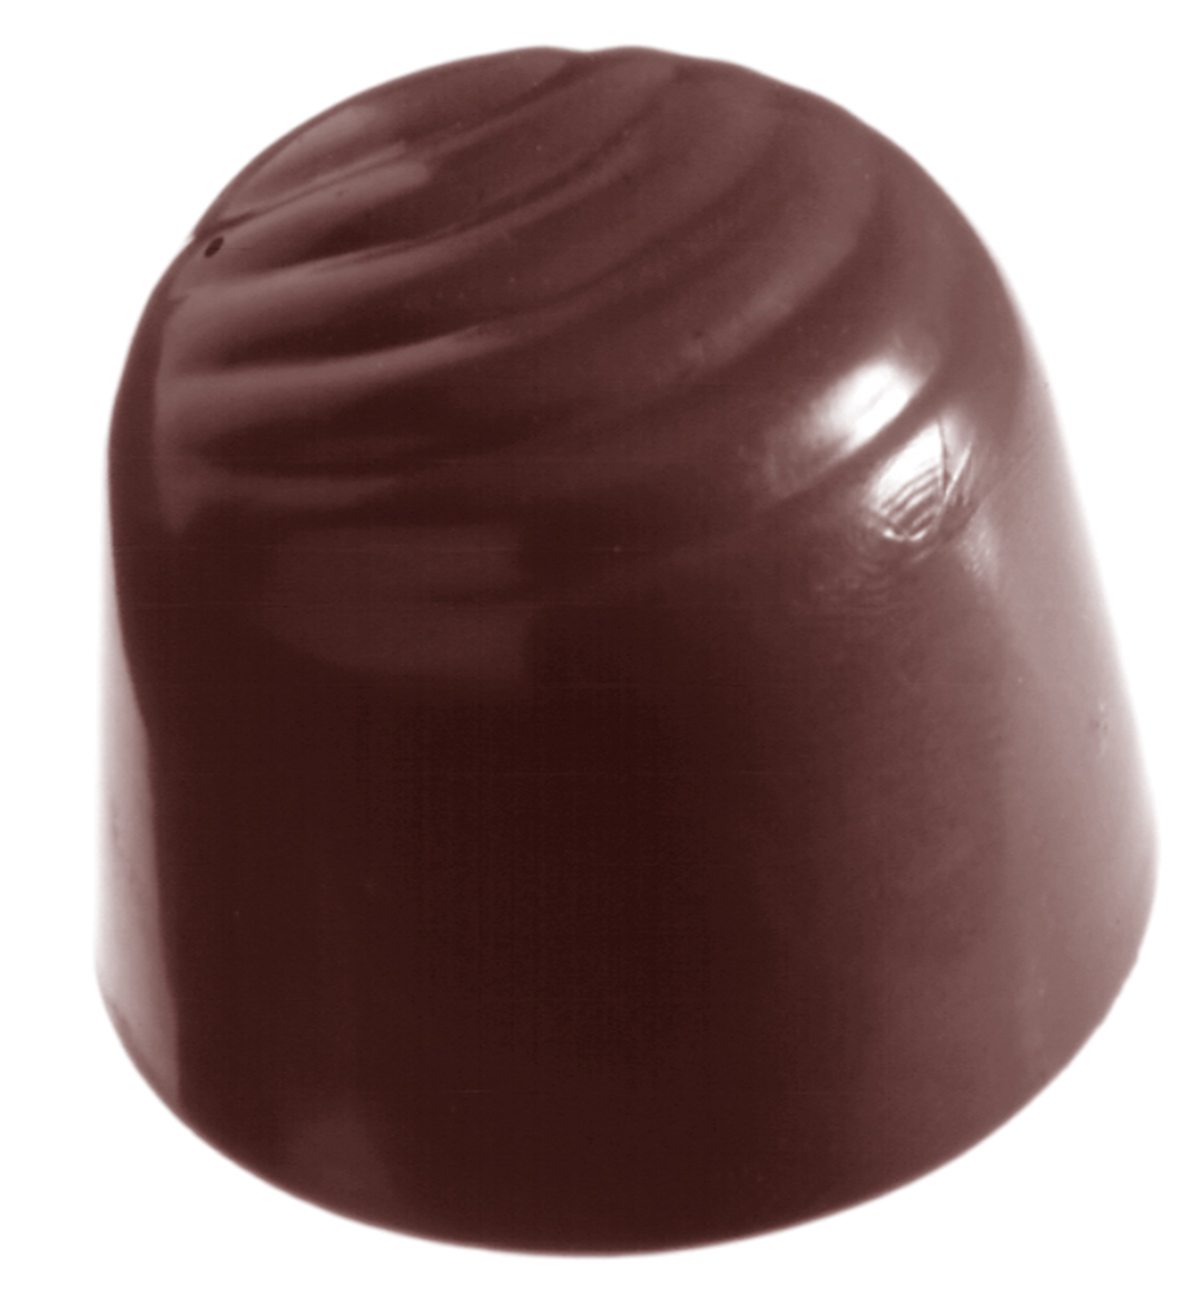 Se Professionel chokoladeform i polycarbonat - Cherry Small CW1081 hos BageTid.dk